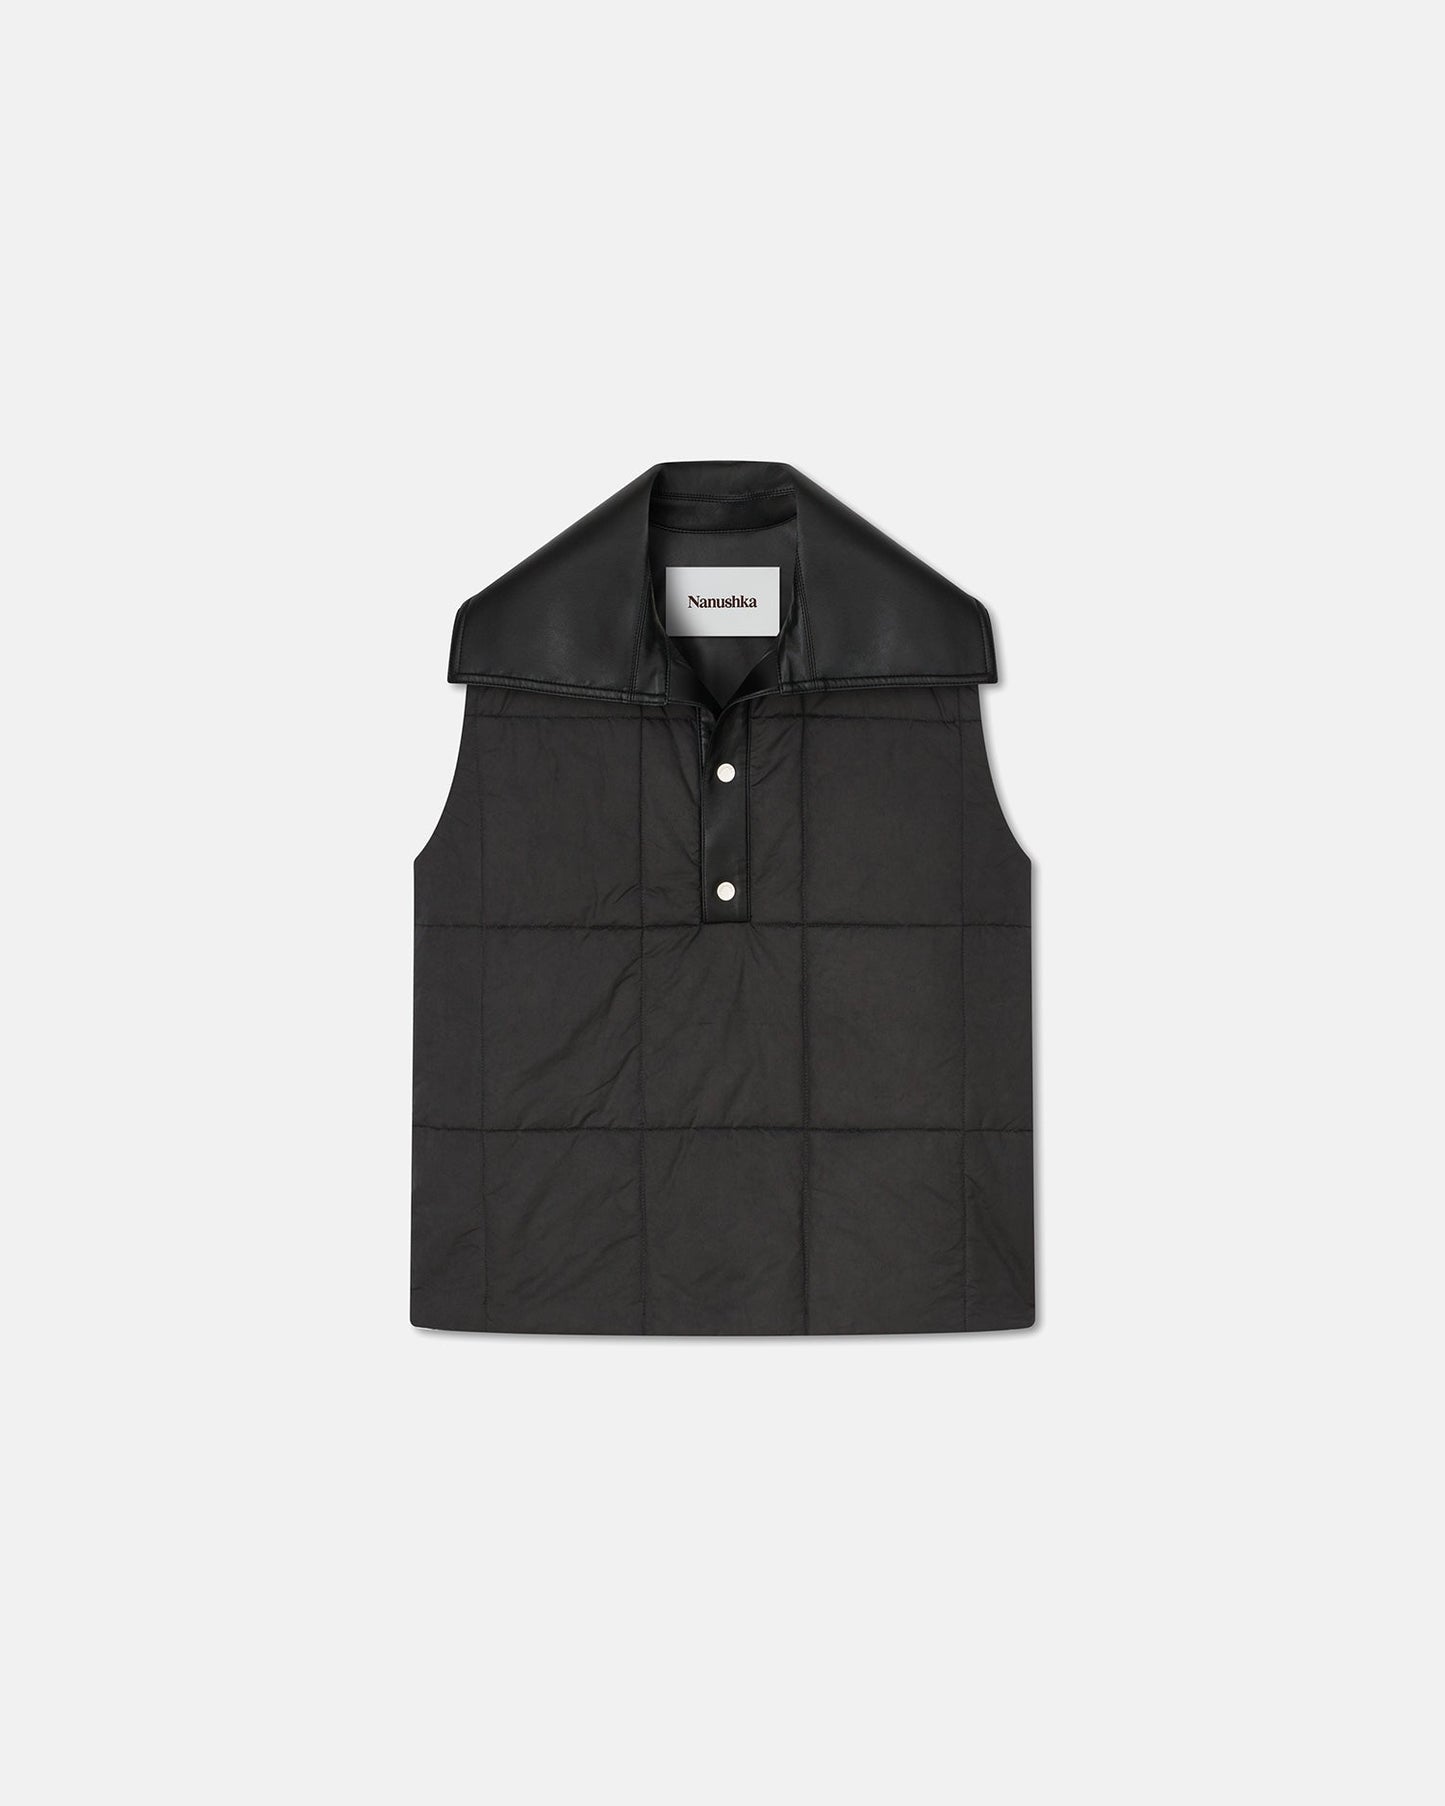 Mael - Regenerated Leather Jacket - Off Black